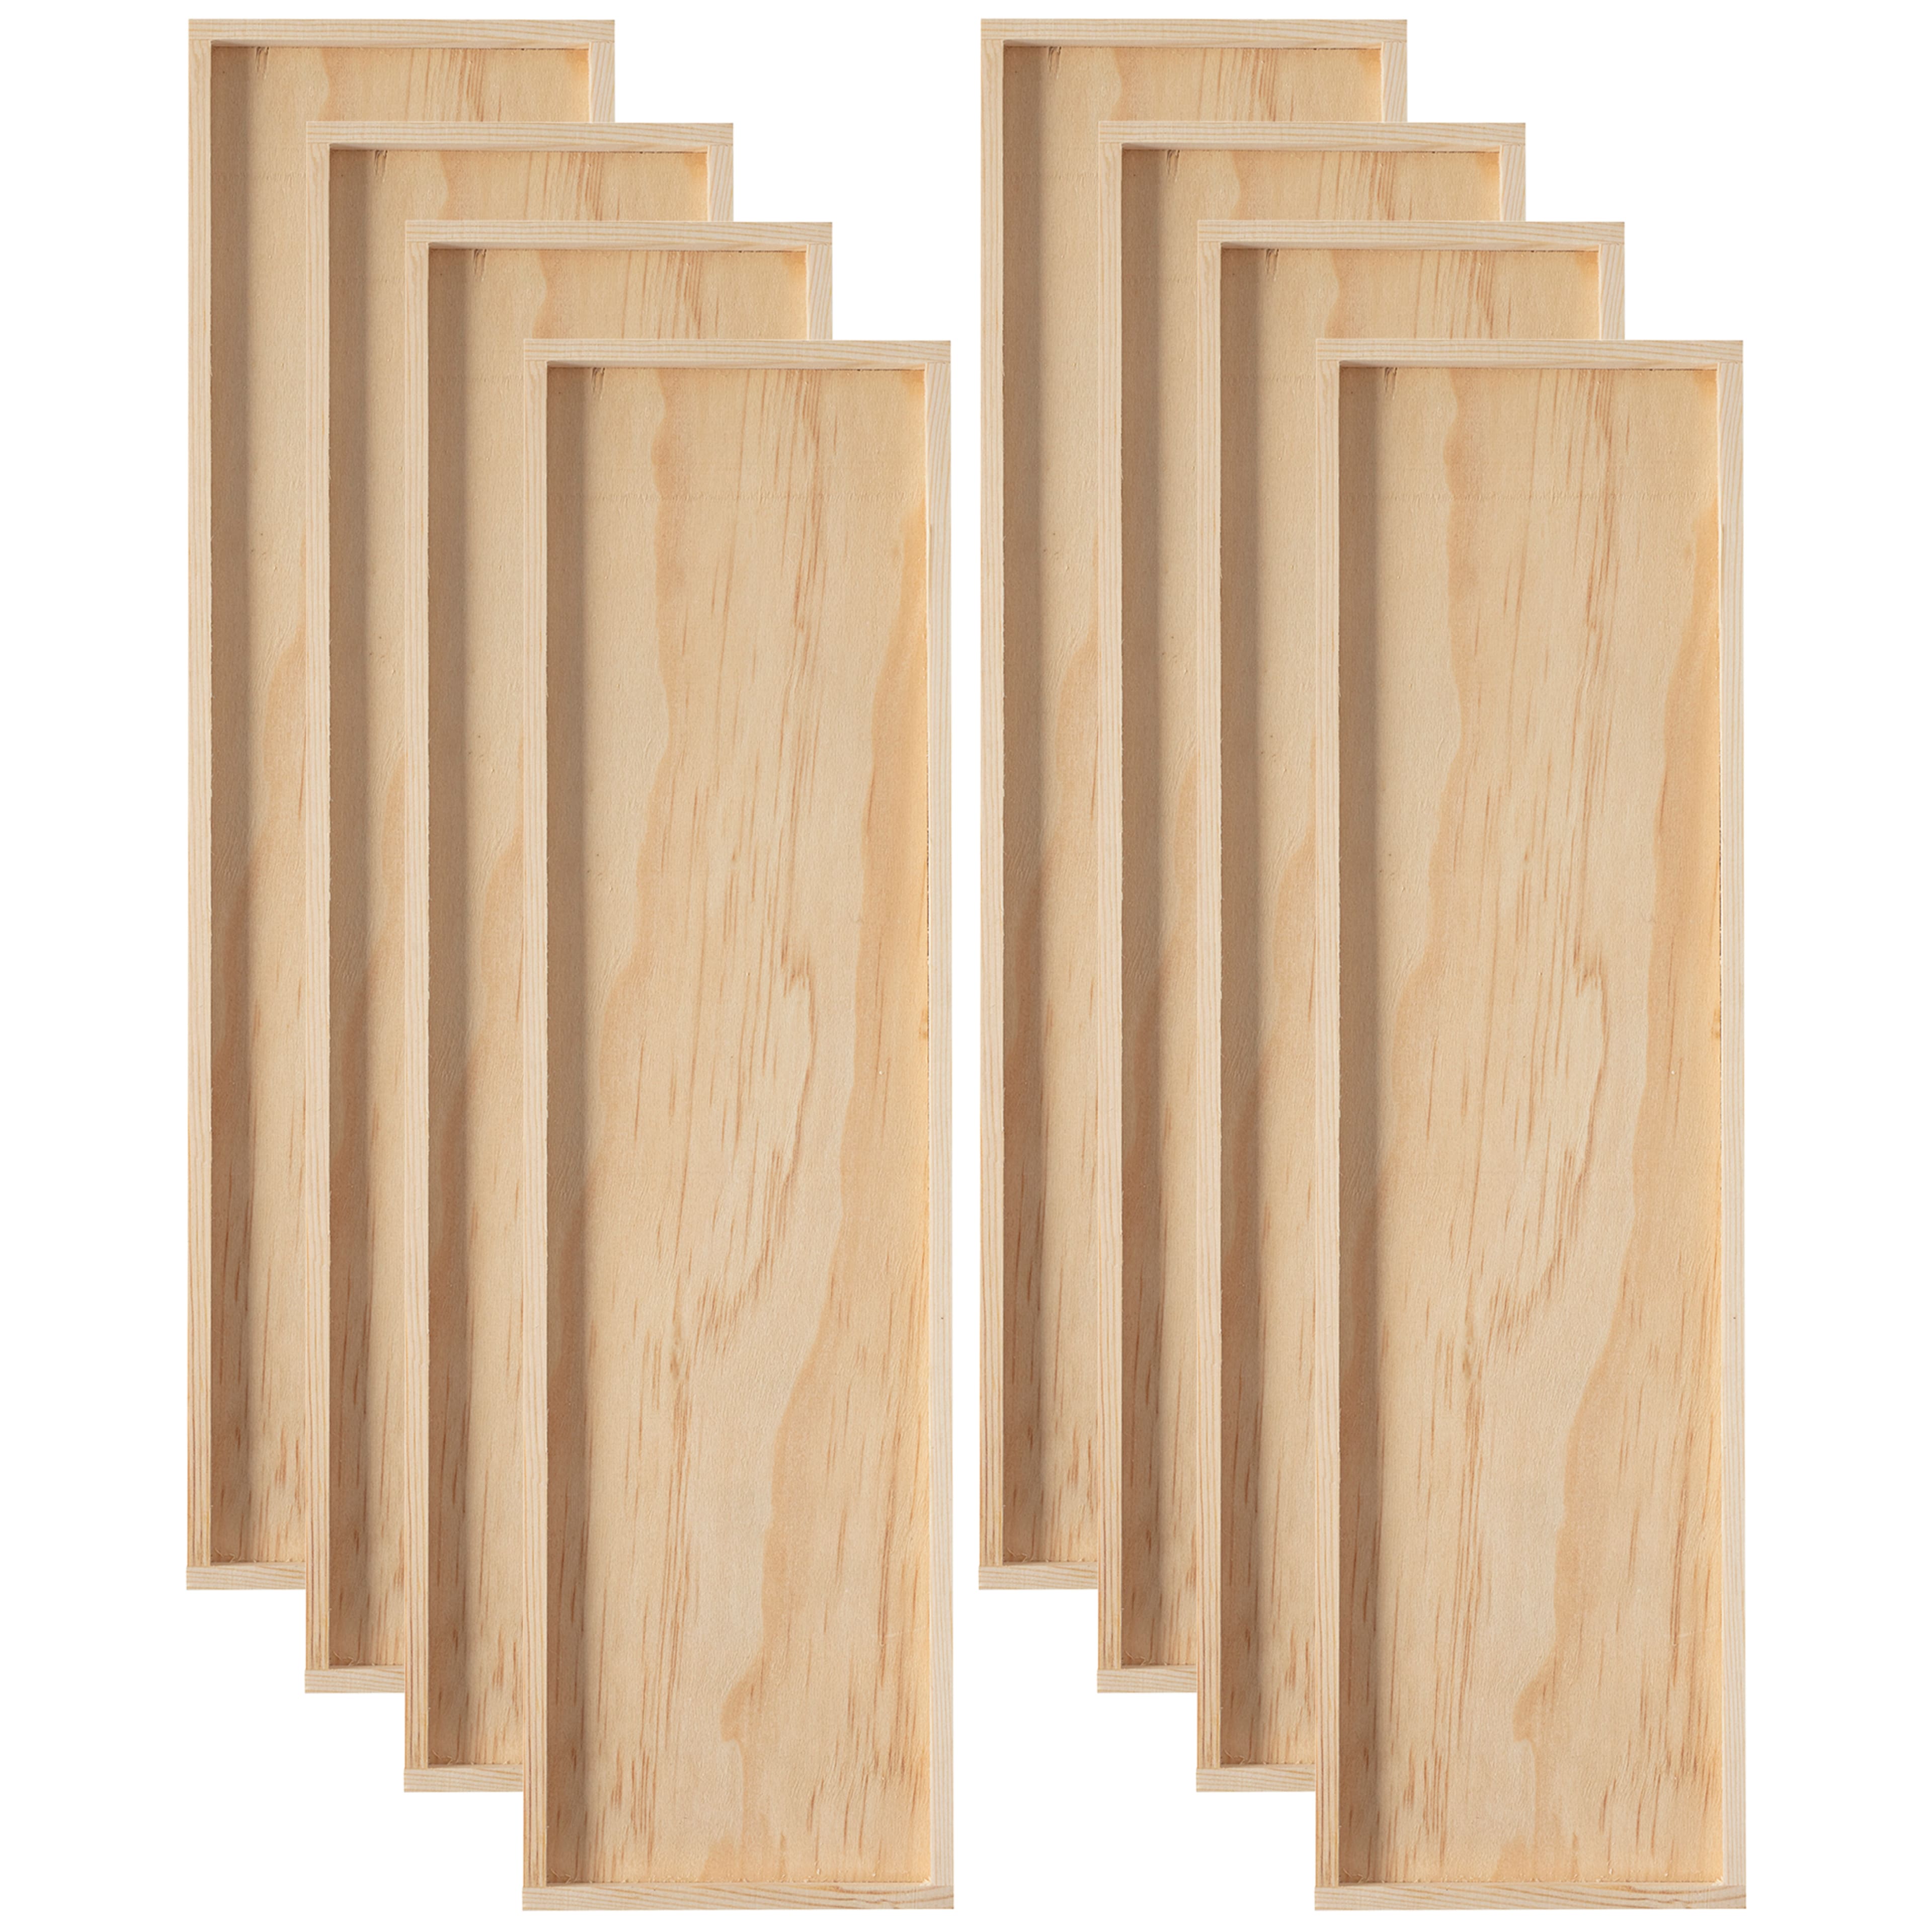 Blank Wooden Signs Crafts Unfinished Paulownia Wood Board Plaques for DIY  Projects High Quality Furniture Use Decorative Blockboard/Block Board -  China Paulownia Board, Kiri